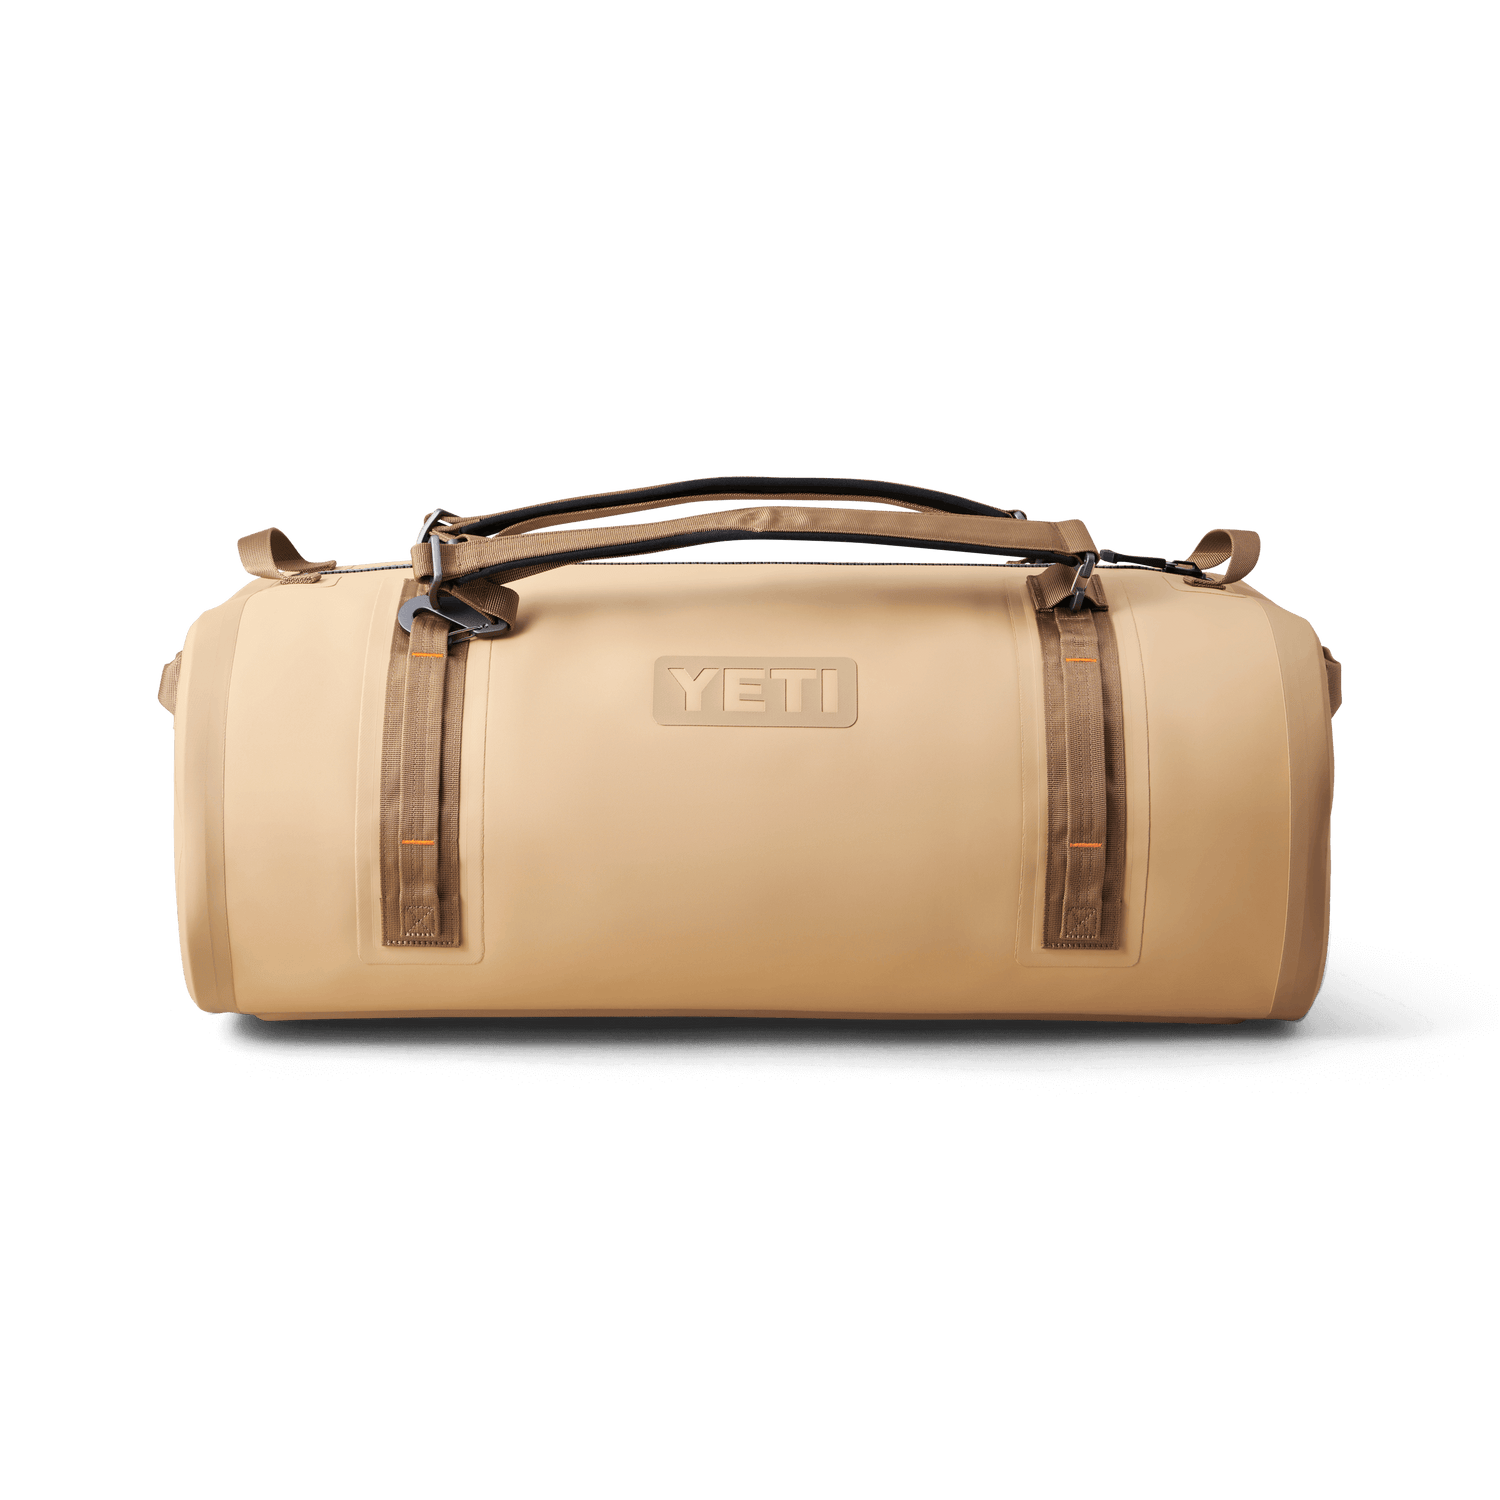 YETI Gear Bags: Duffels, Backpacks, Tote Bags – YETI EUROPE